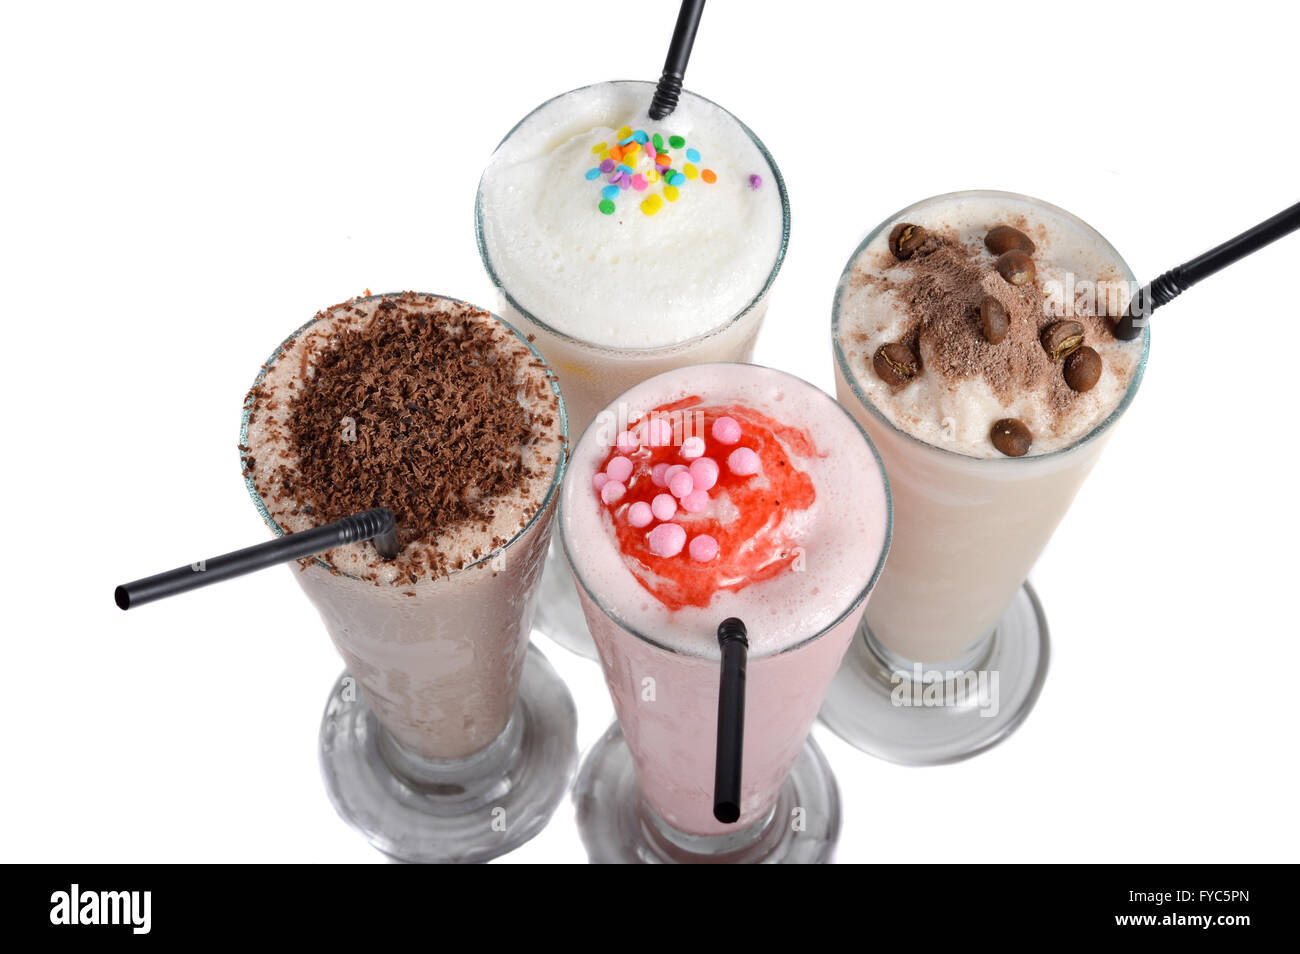 https://c8.alamy.com/comp/FYC5PN/four-types-of-milkshake-drink-on-white-background-FYC5PN.jpg